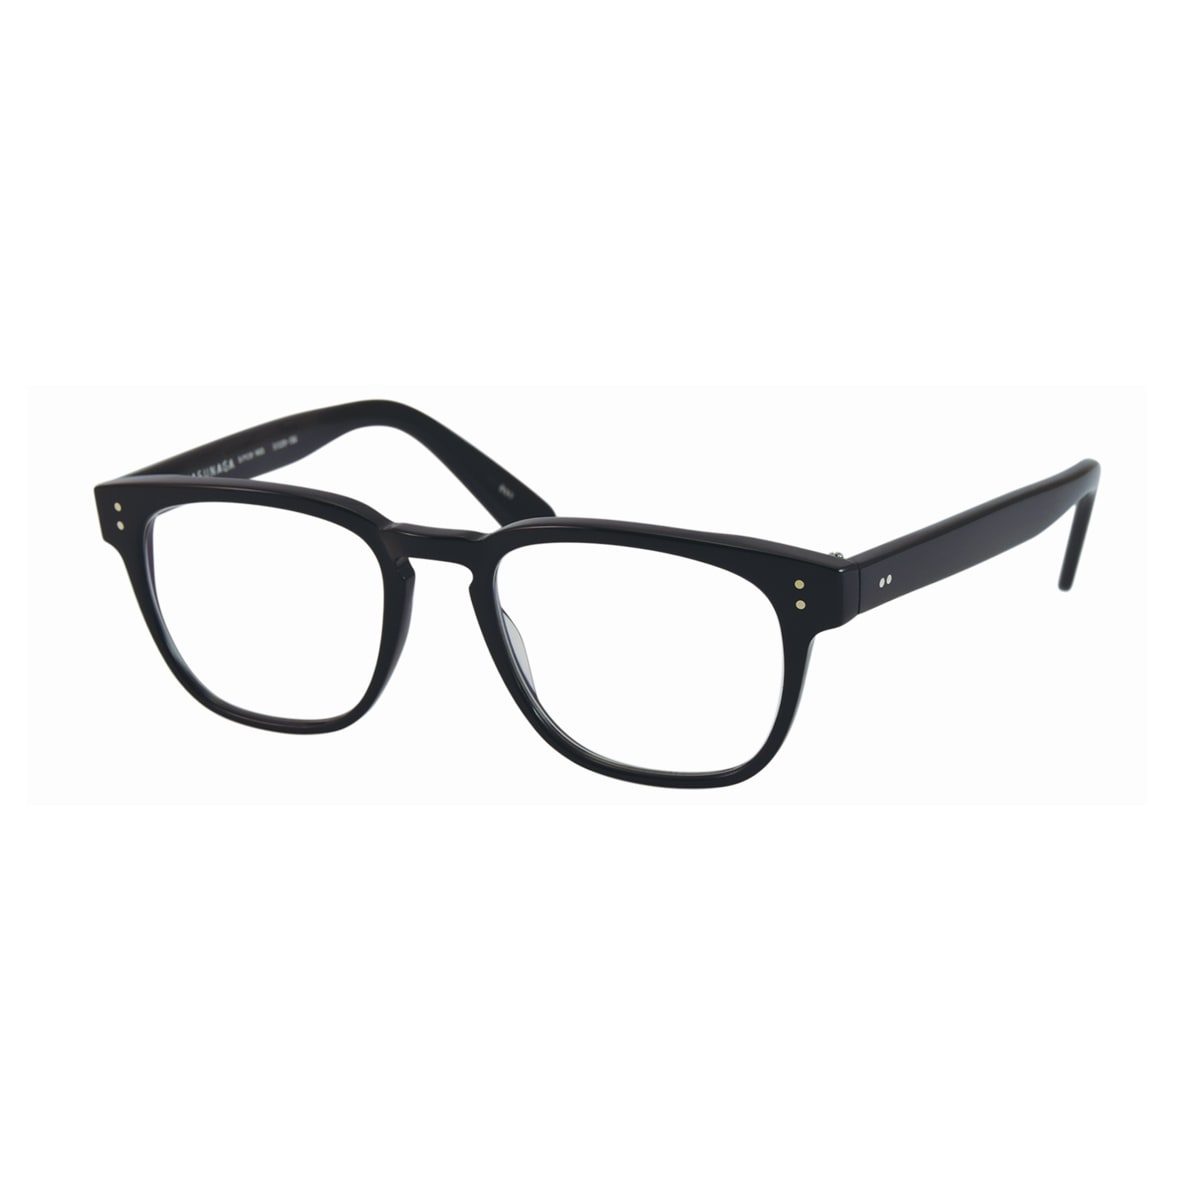 Masunaga 11dm4bl0a Glasses